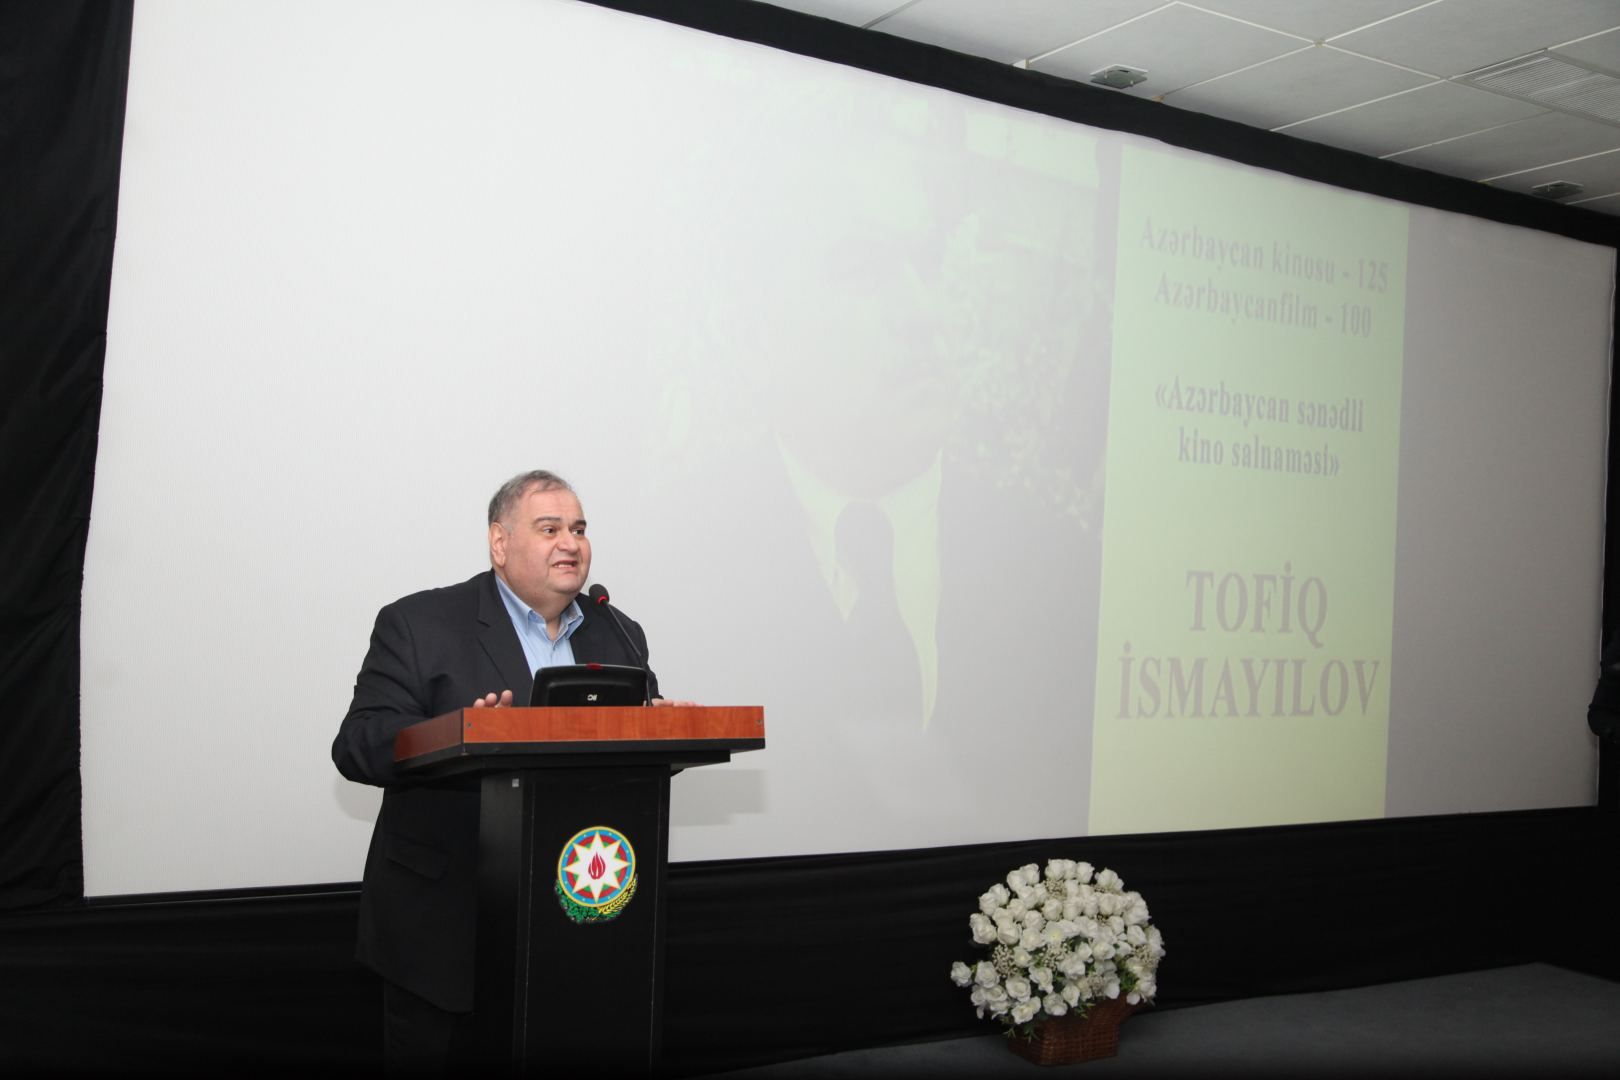 Films by Azerbaijan's Tofig Ismayilov take audience on journey through documentary cinema [PHOTOS]